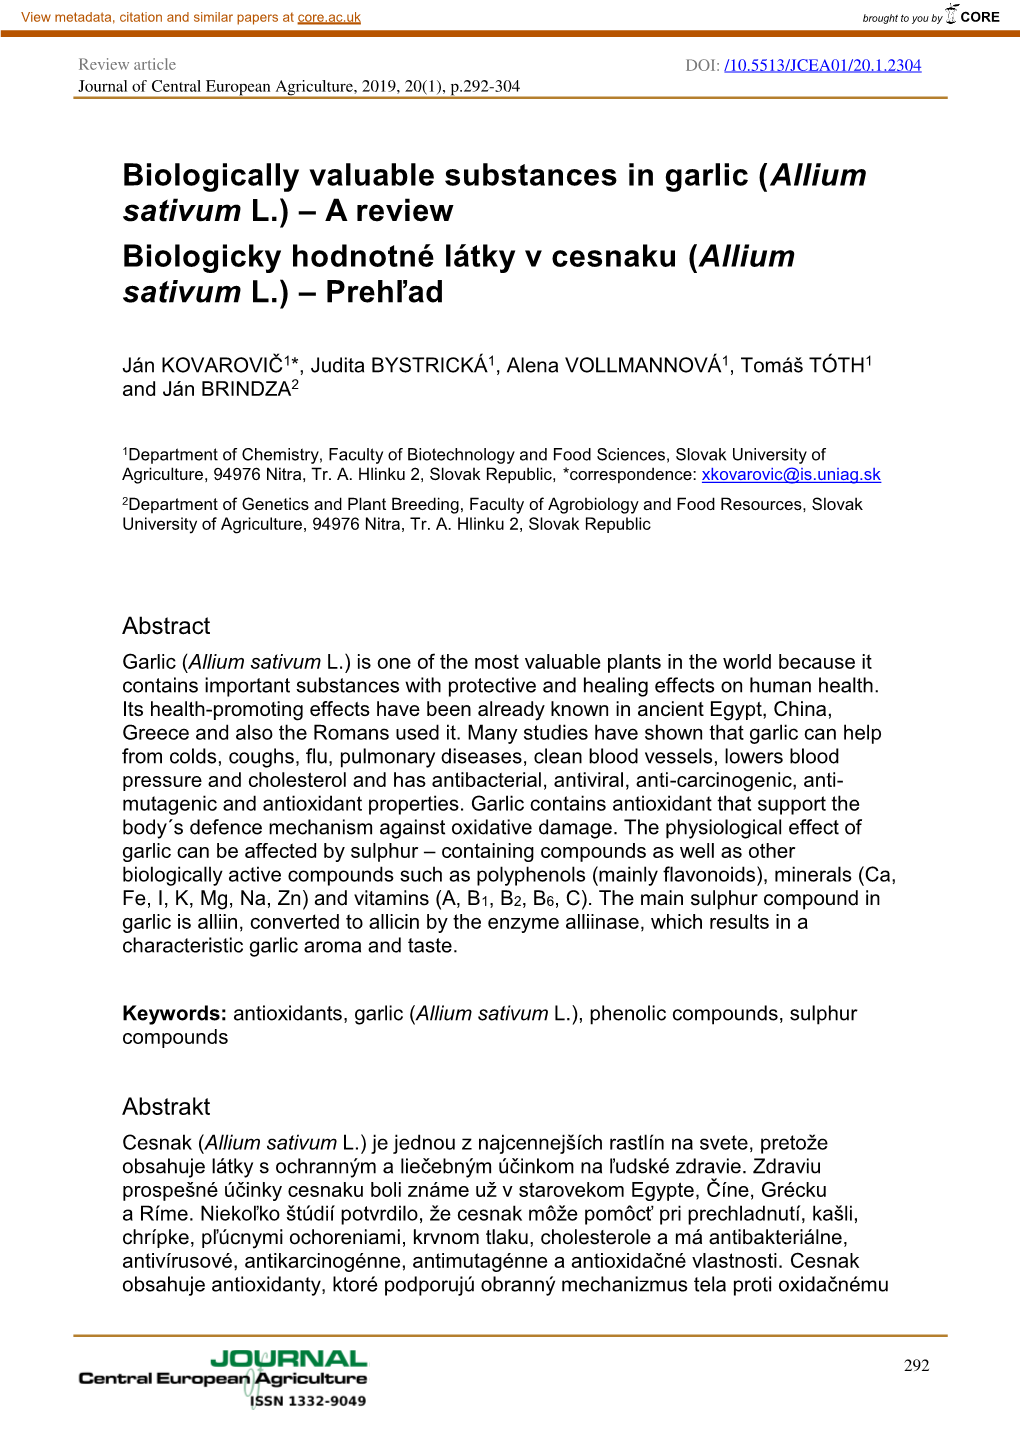 Biologically Valuable Substances in Garlic (Allium Sativum L.) – a Review Biologicky Hodnotné Látky V Cesnaku (Allium Sativum L.) – Prehľad